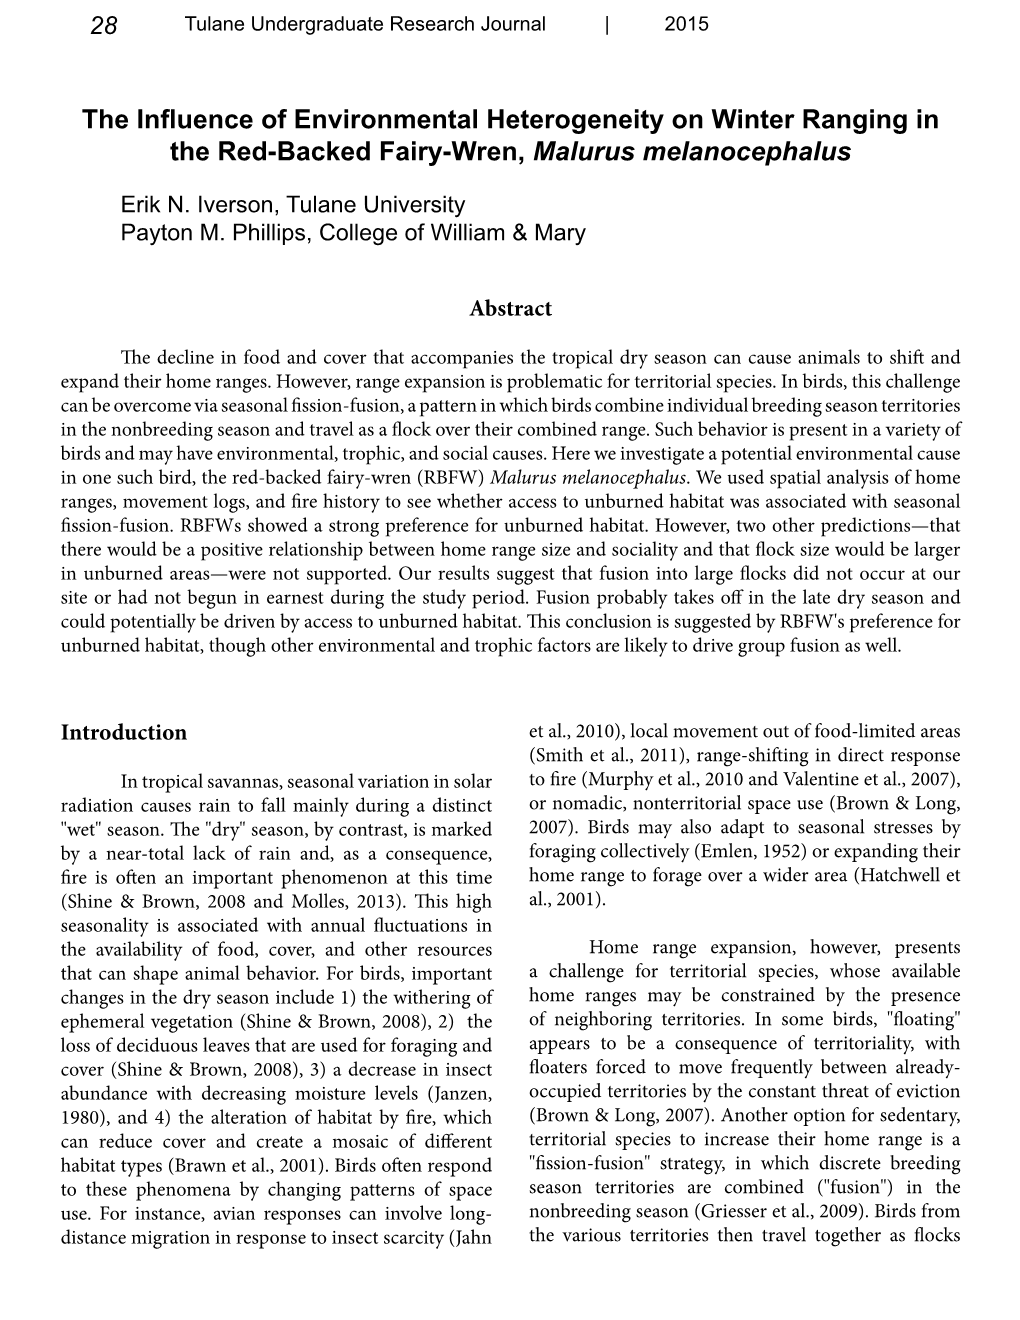 The Influence of Environmental Heterogeneity on Winter Ranging in the Red-Backed Fairy-Wren, Malurus Melanocephalus